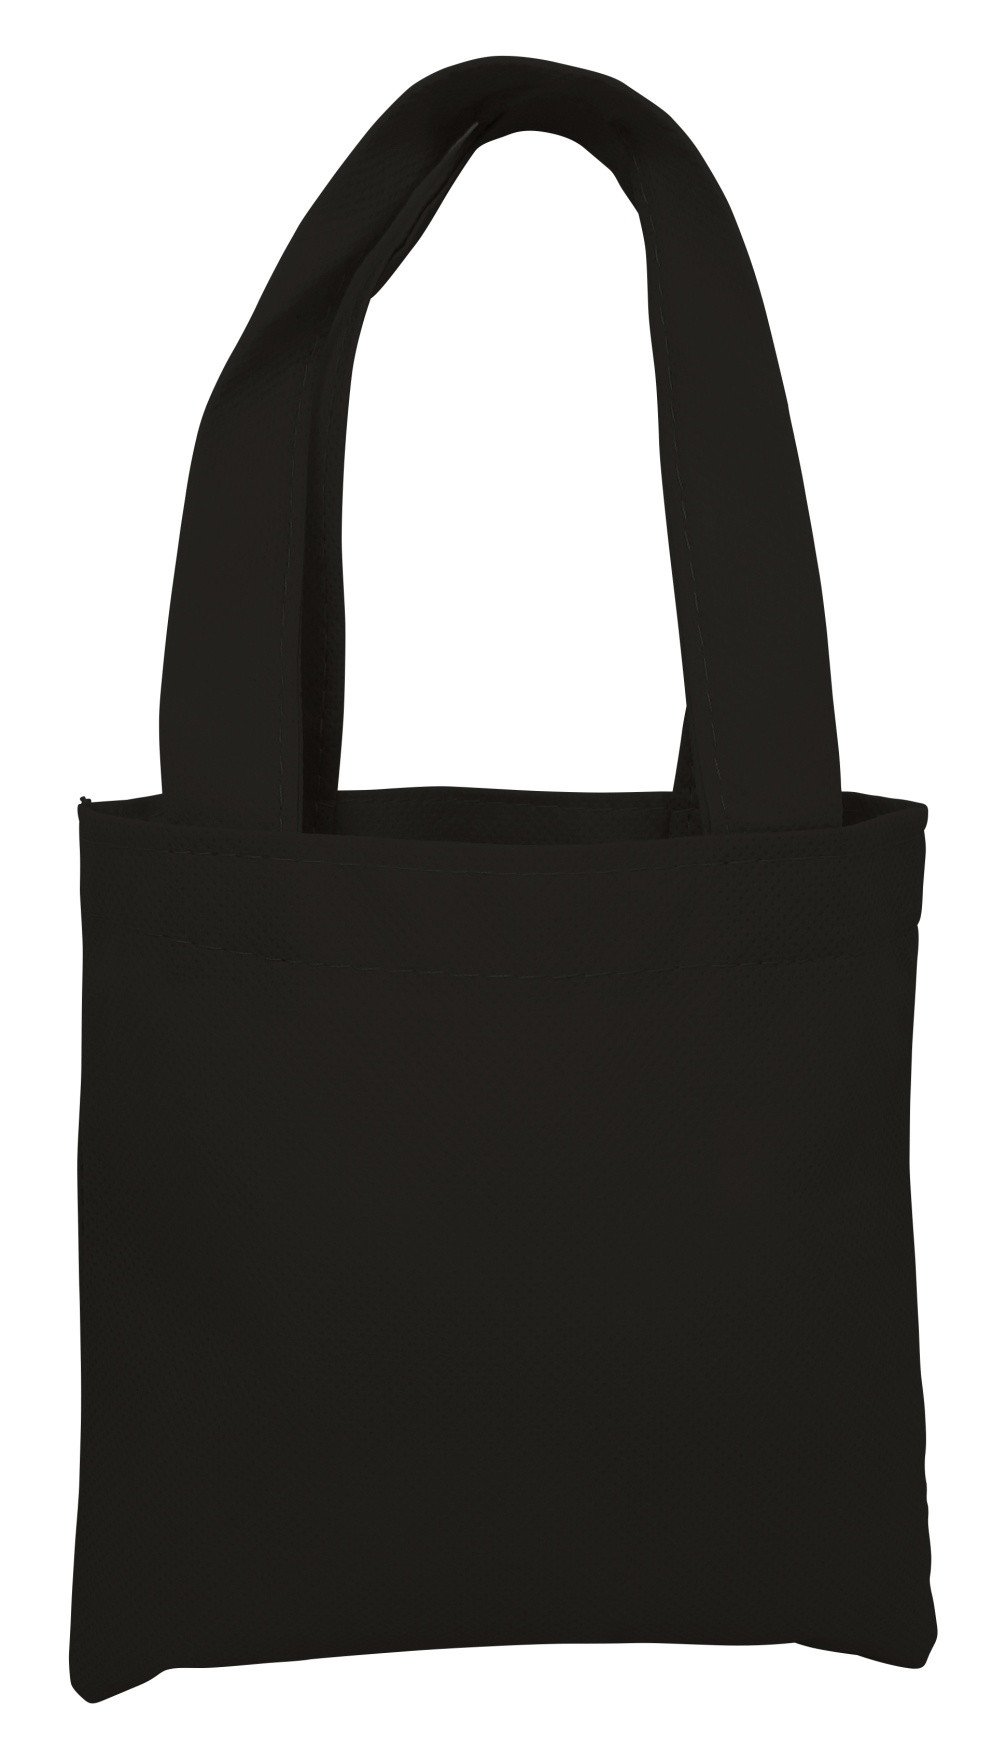 MINI Non Woven Tote Bag gift bag black